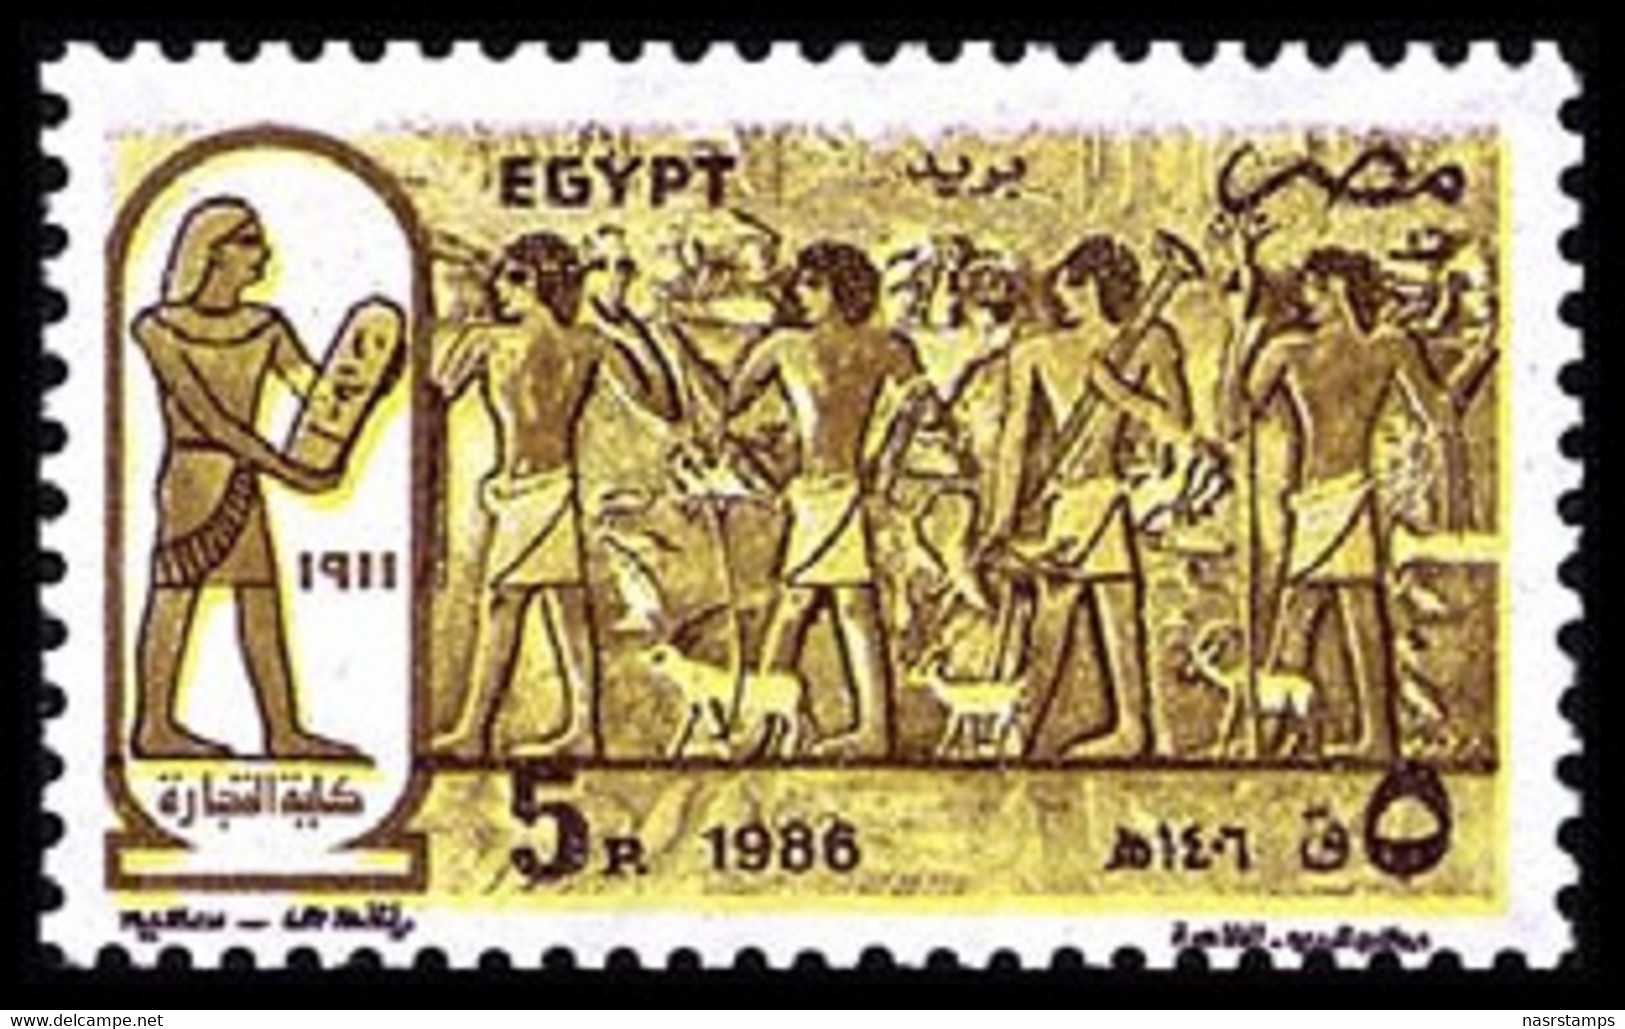 Egypt - 1986 - Egyptology - ( Faculty Of Commerce, Cairo Univ., 75th Anniv. - Btah Hotteb's Tomb At Saqqara ) - Unused Stamps